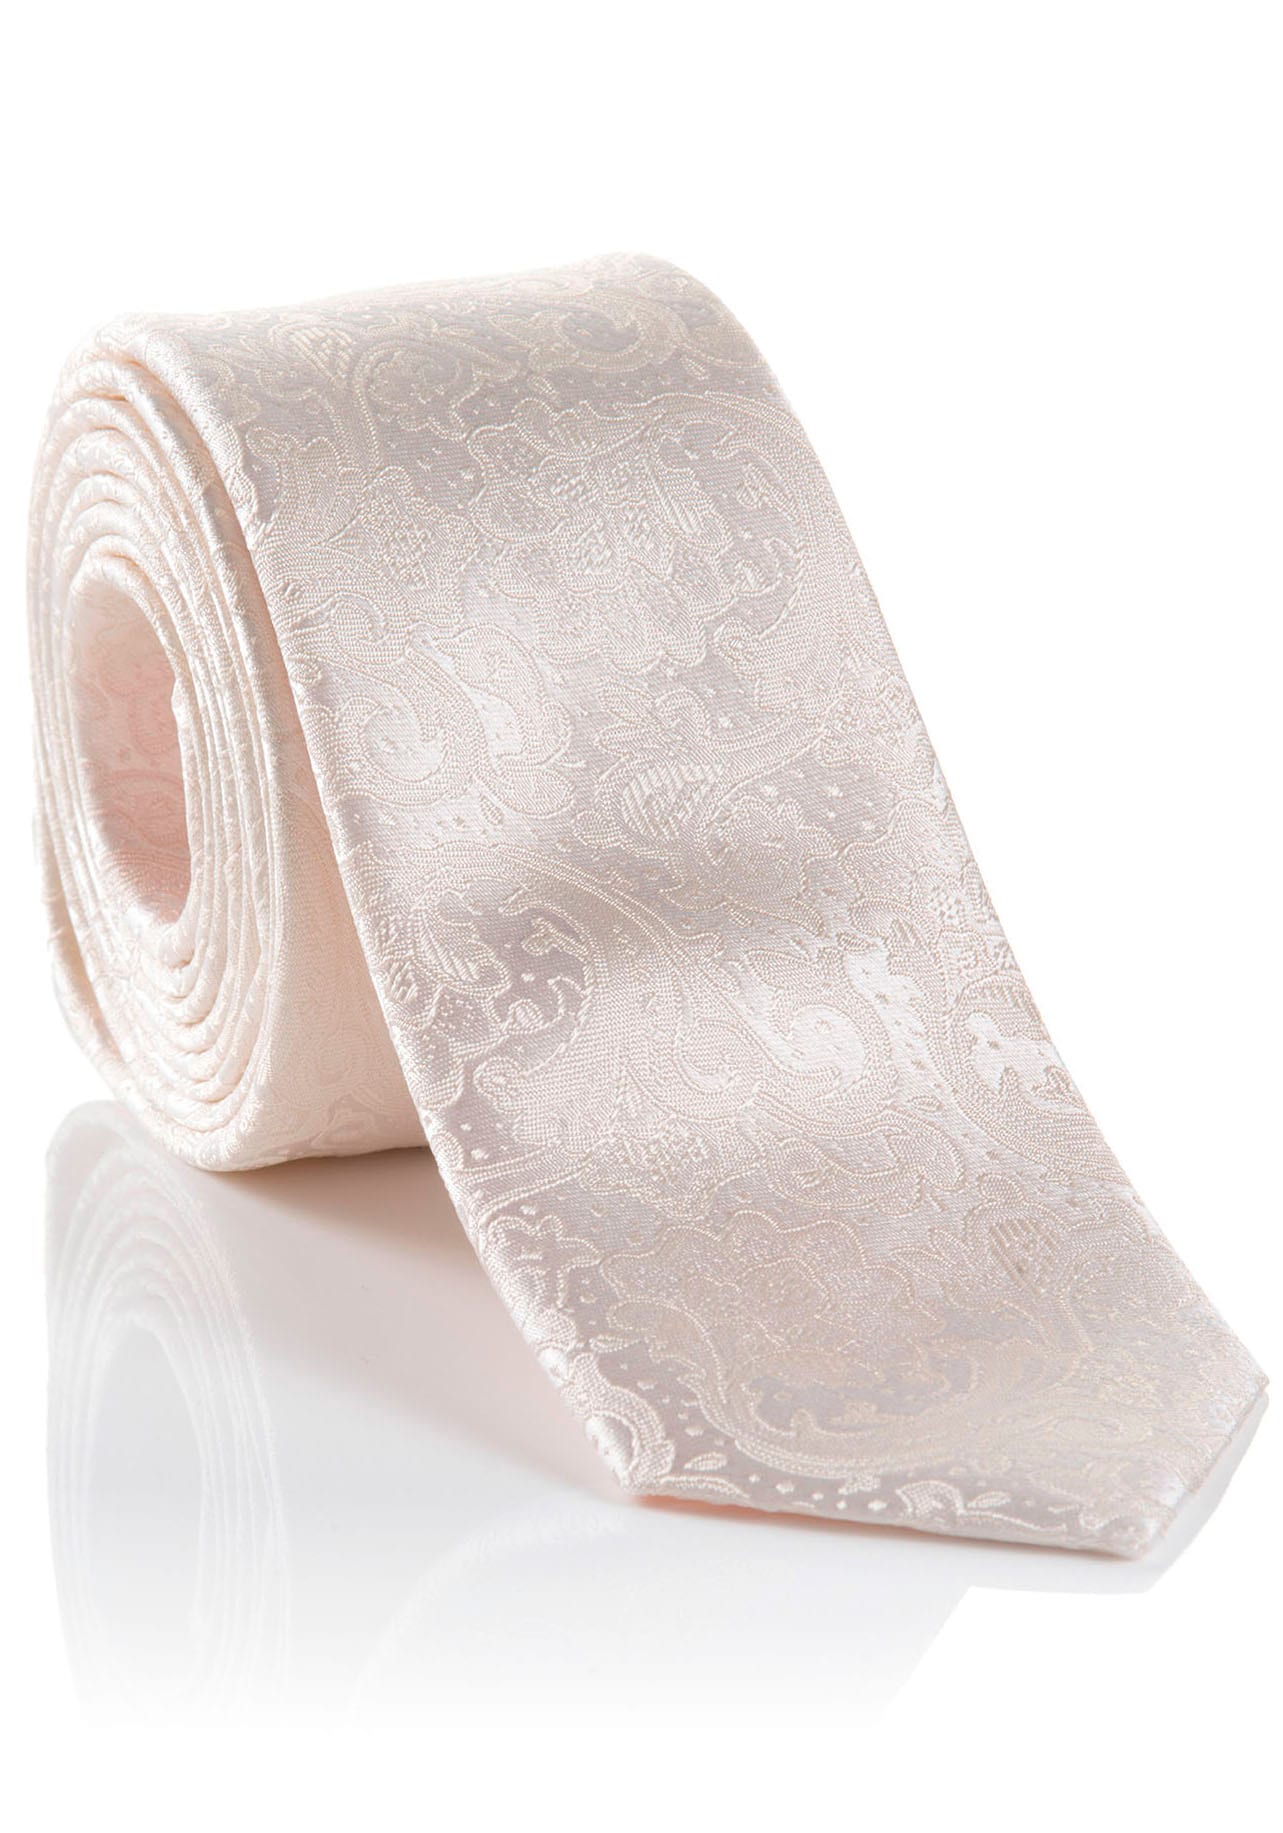 bestellen Krawatte online »LELIO«, Paisley-Muster Seide, reiner Krawatte MONTI UNIVERSAL aus |